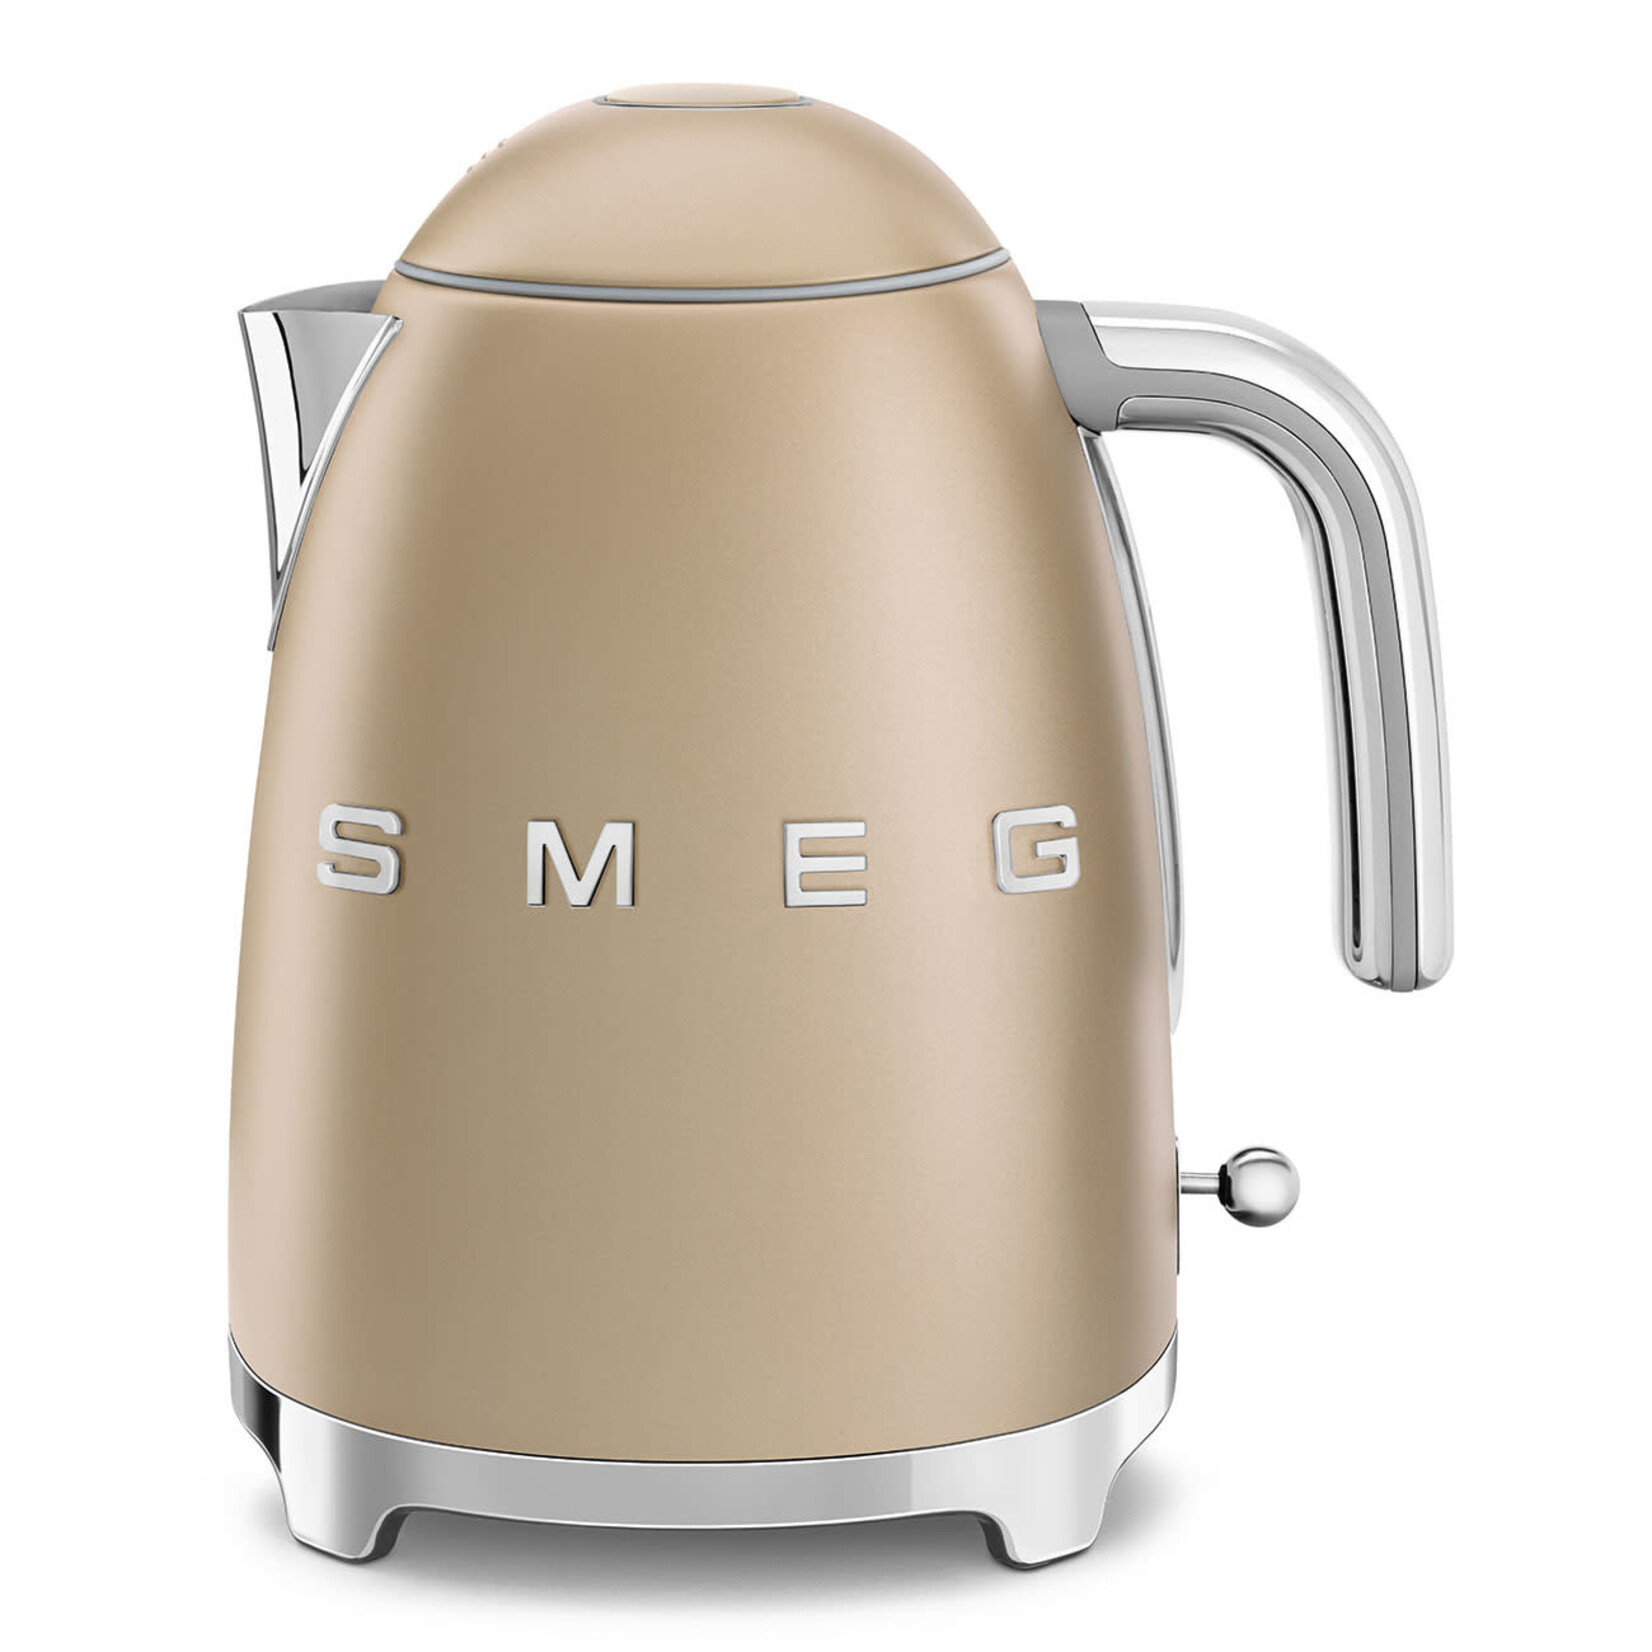 https://cdn.shoplightspeed.com/shops/659299/files/51815065/1652x1652x2/smeg-50s-retro-style-aesthetic-7-cup-kettle.jpg